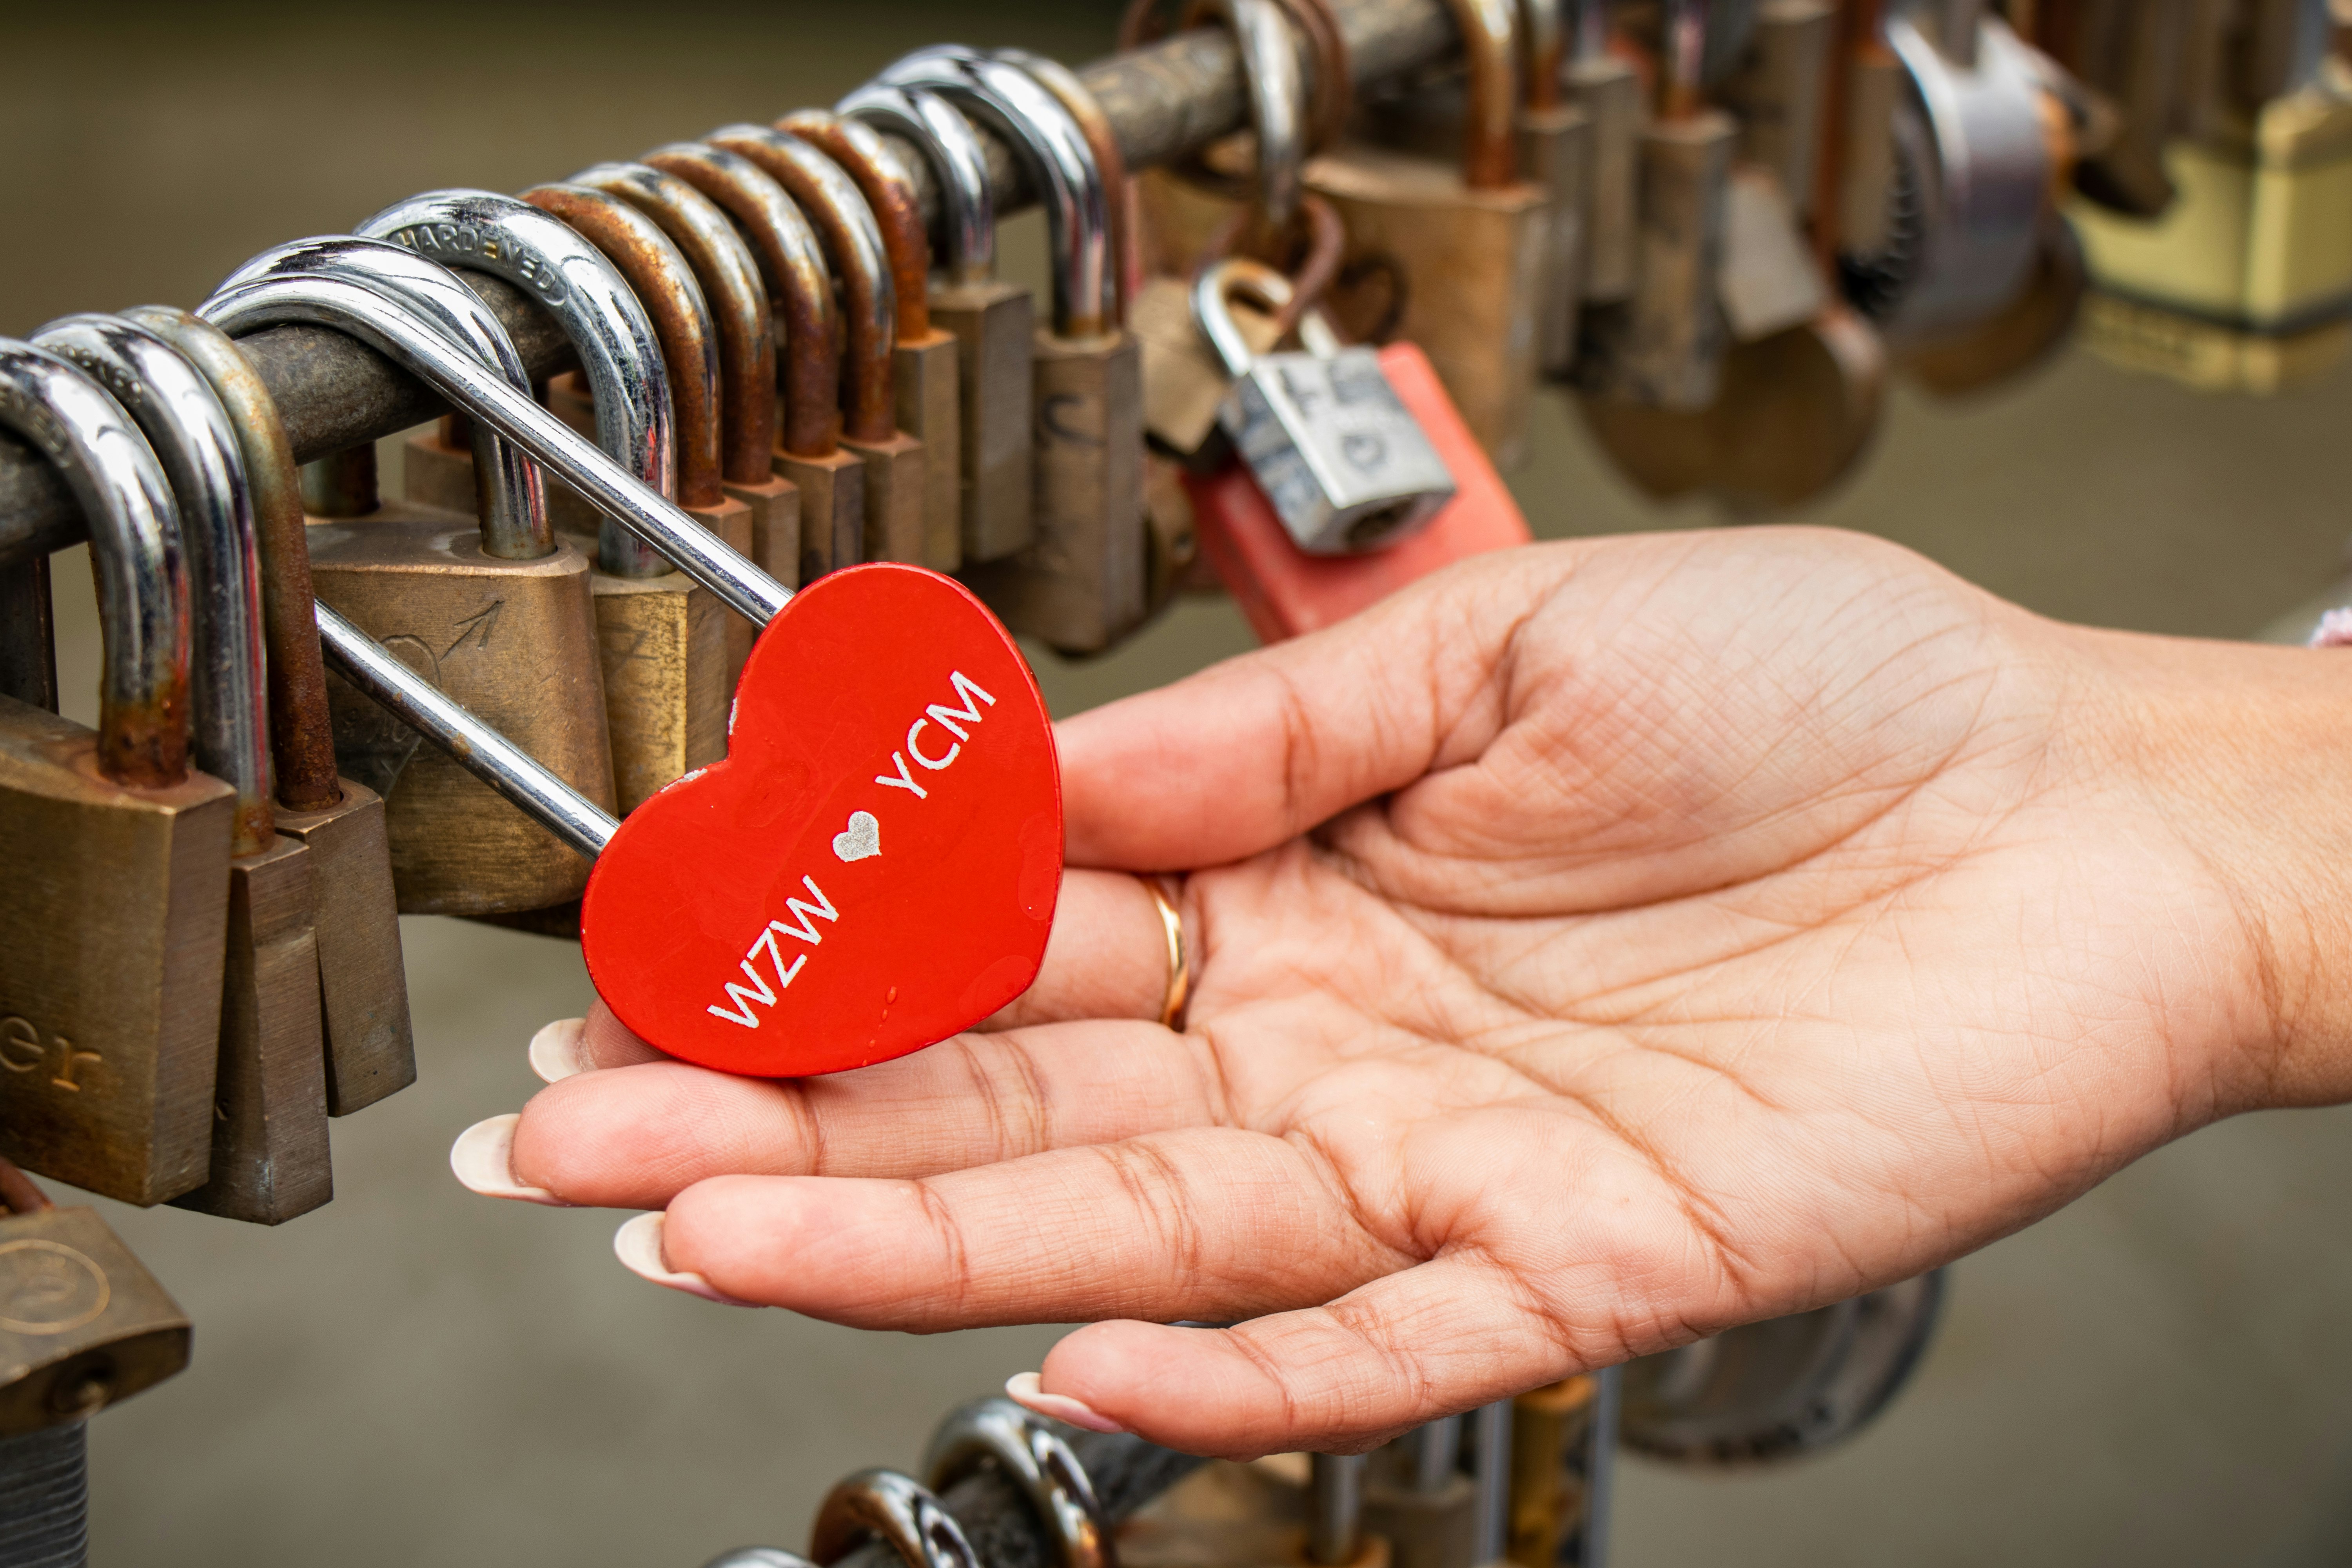 woman holding red heart padlock locked beside locked padlocks on bar